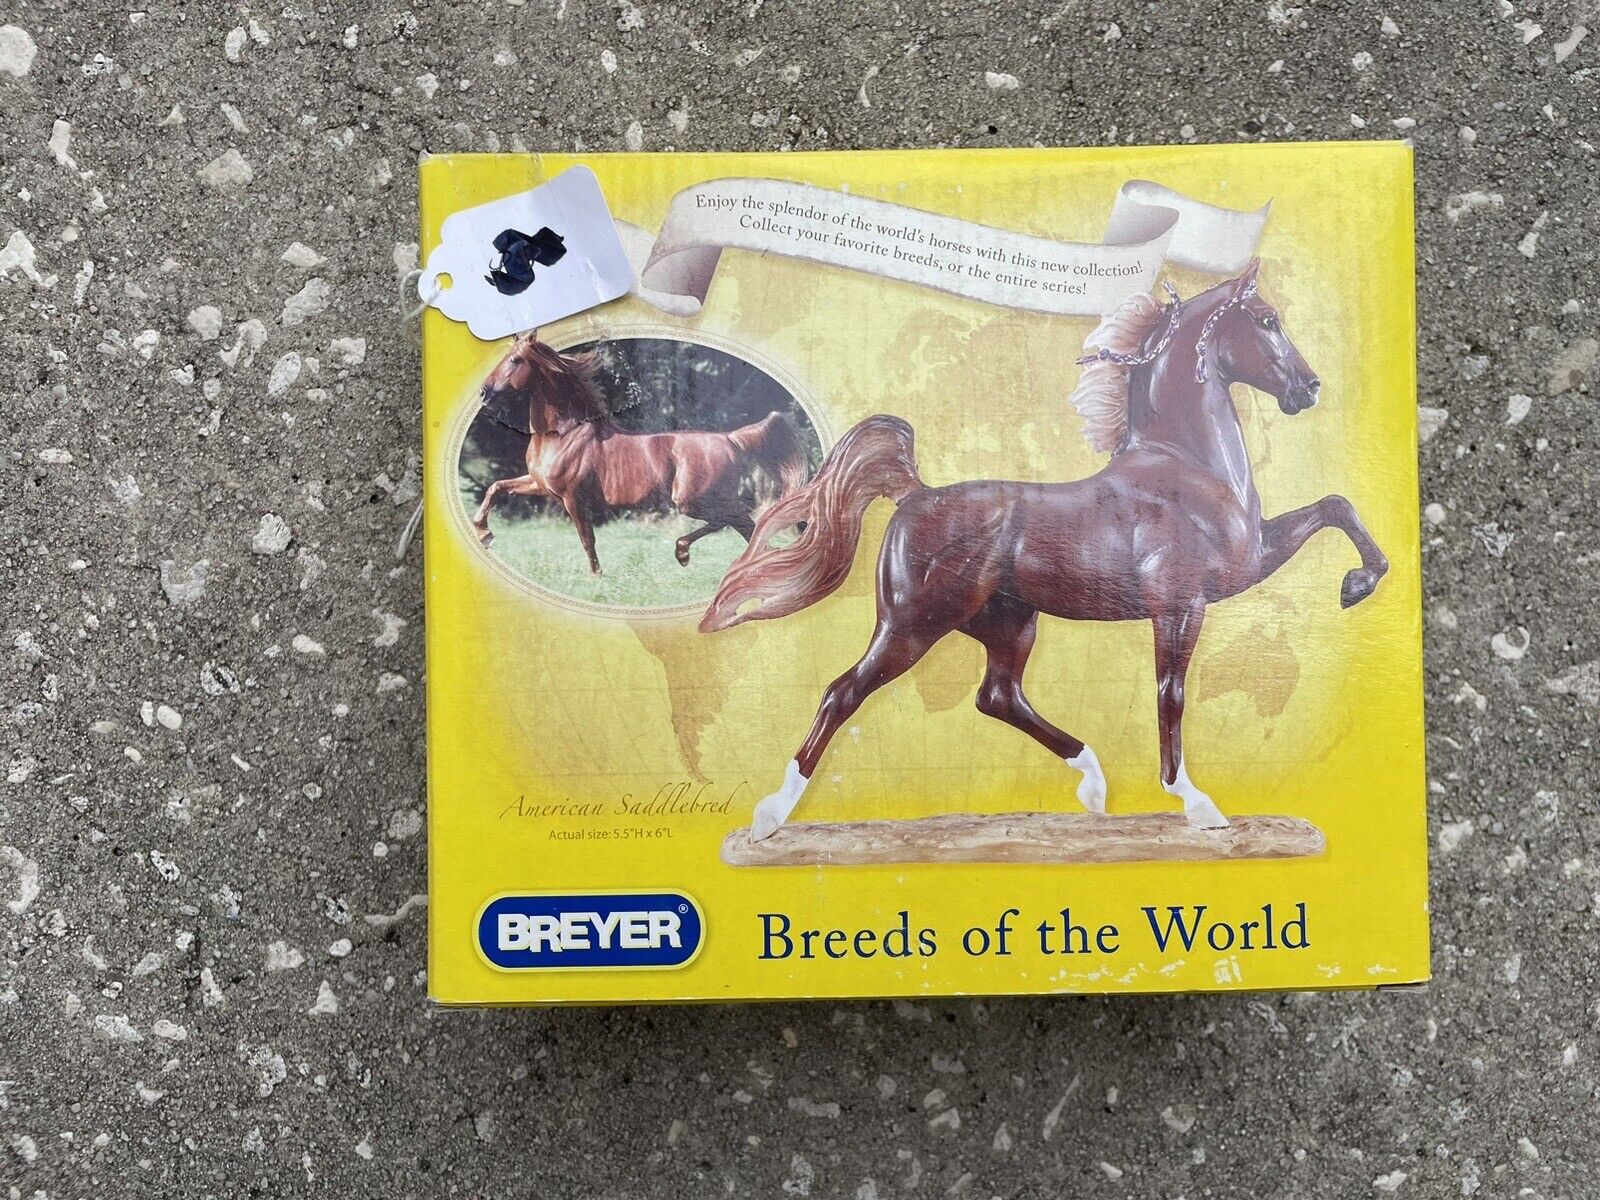 New NIB Breyer Horse #8251 American Saddlebred Breeds of the World Artist Resin